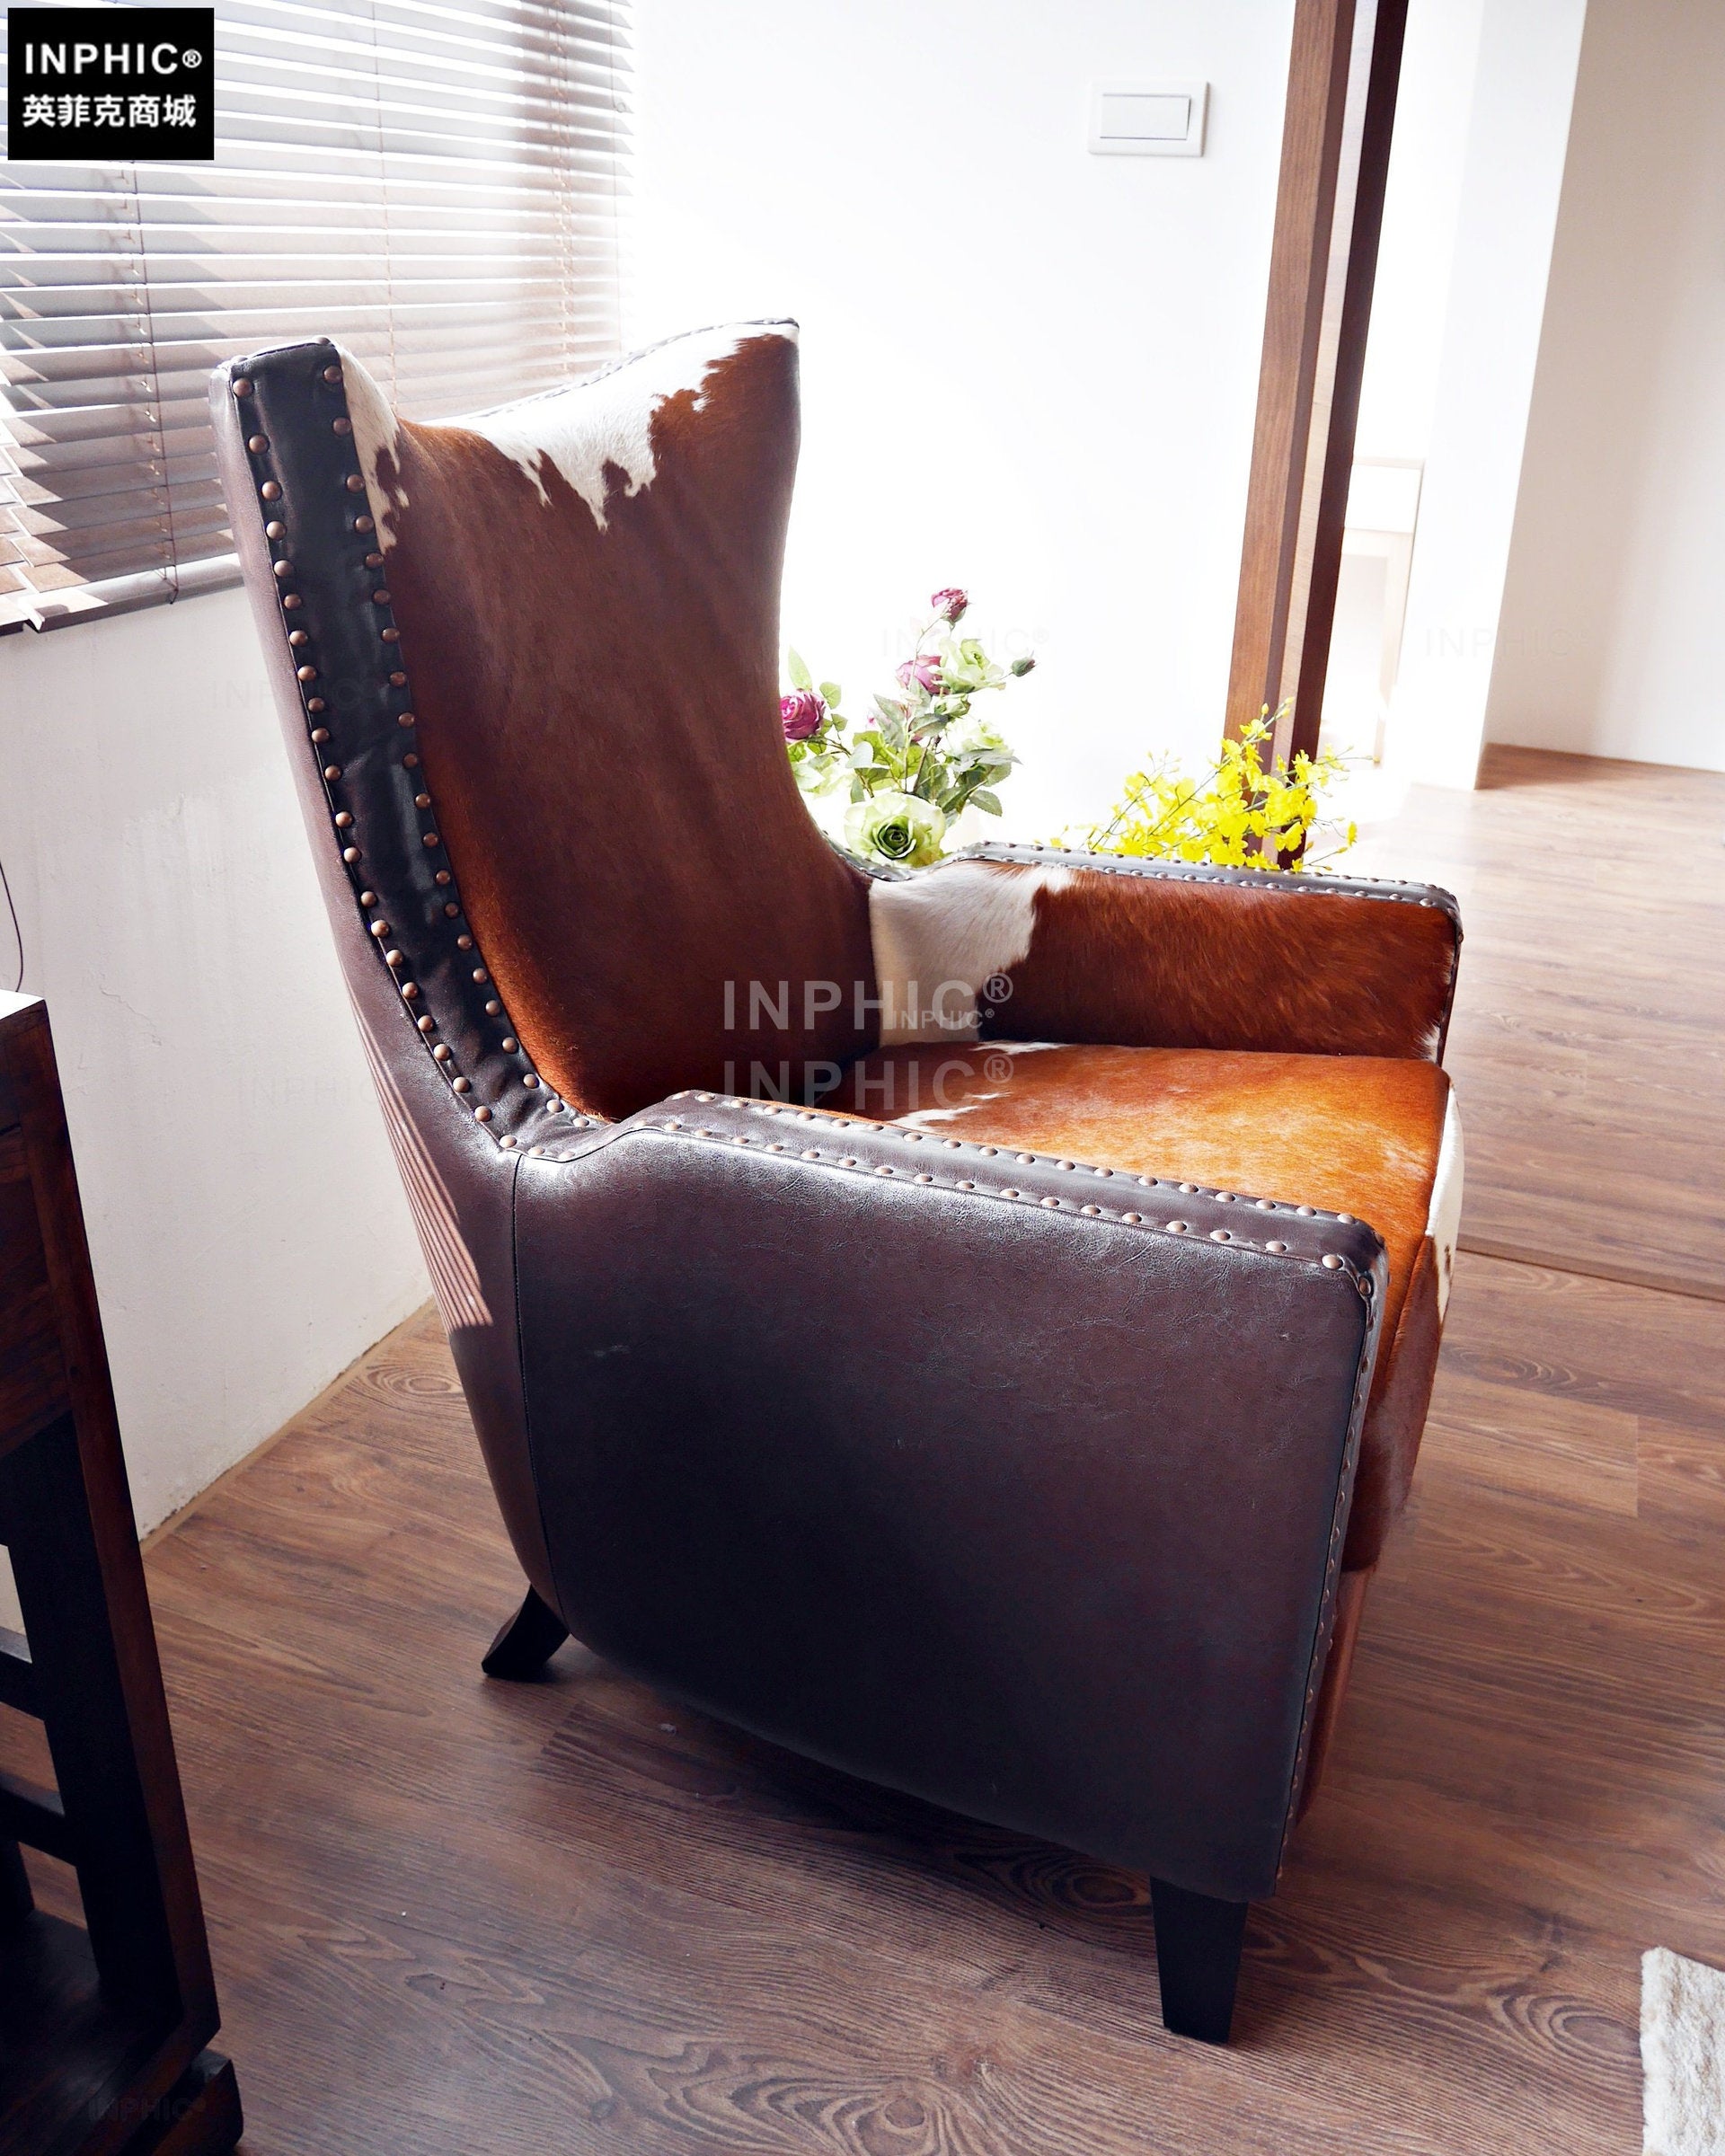 INPHIC-特殊牛皮 造型主人椅 皮沙發